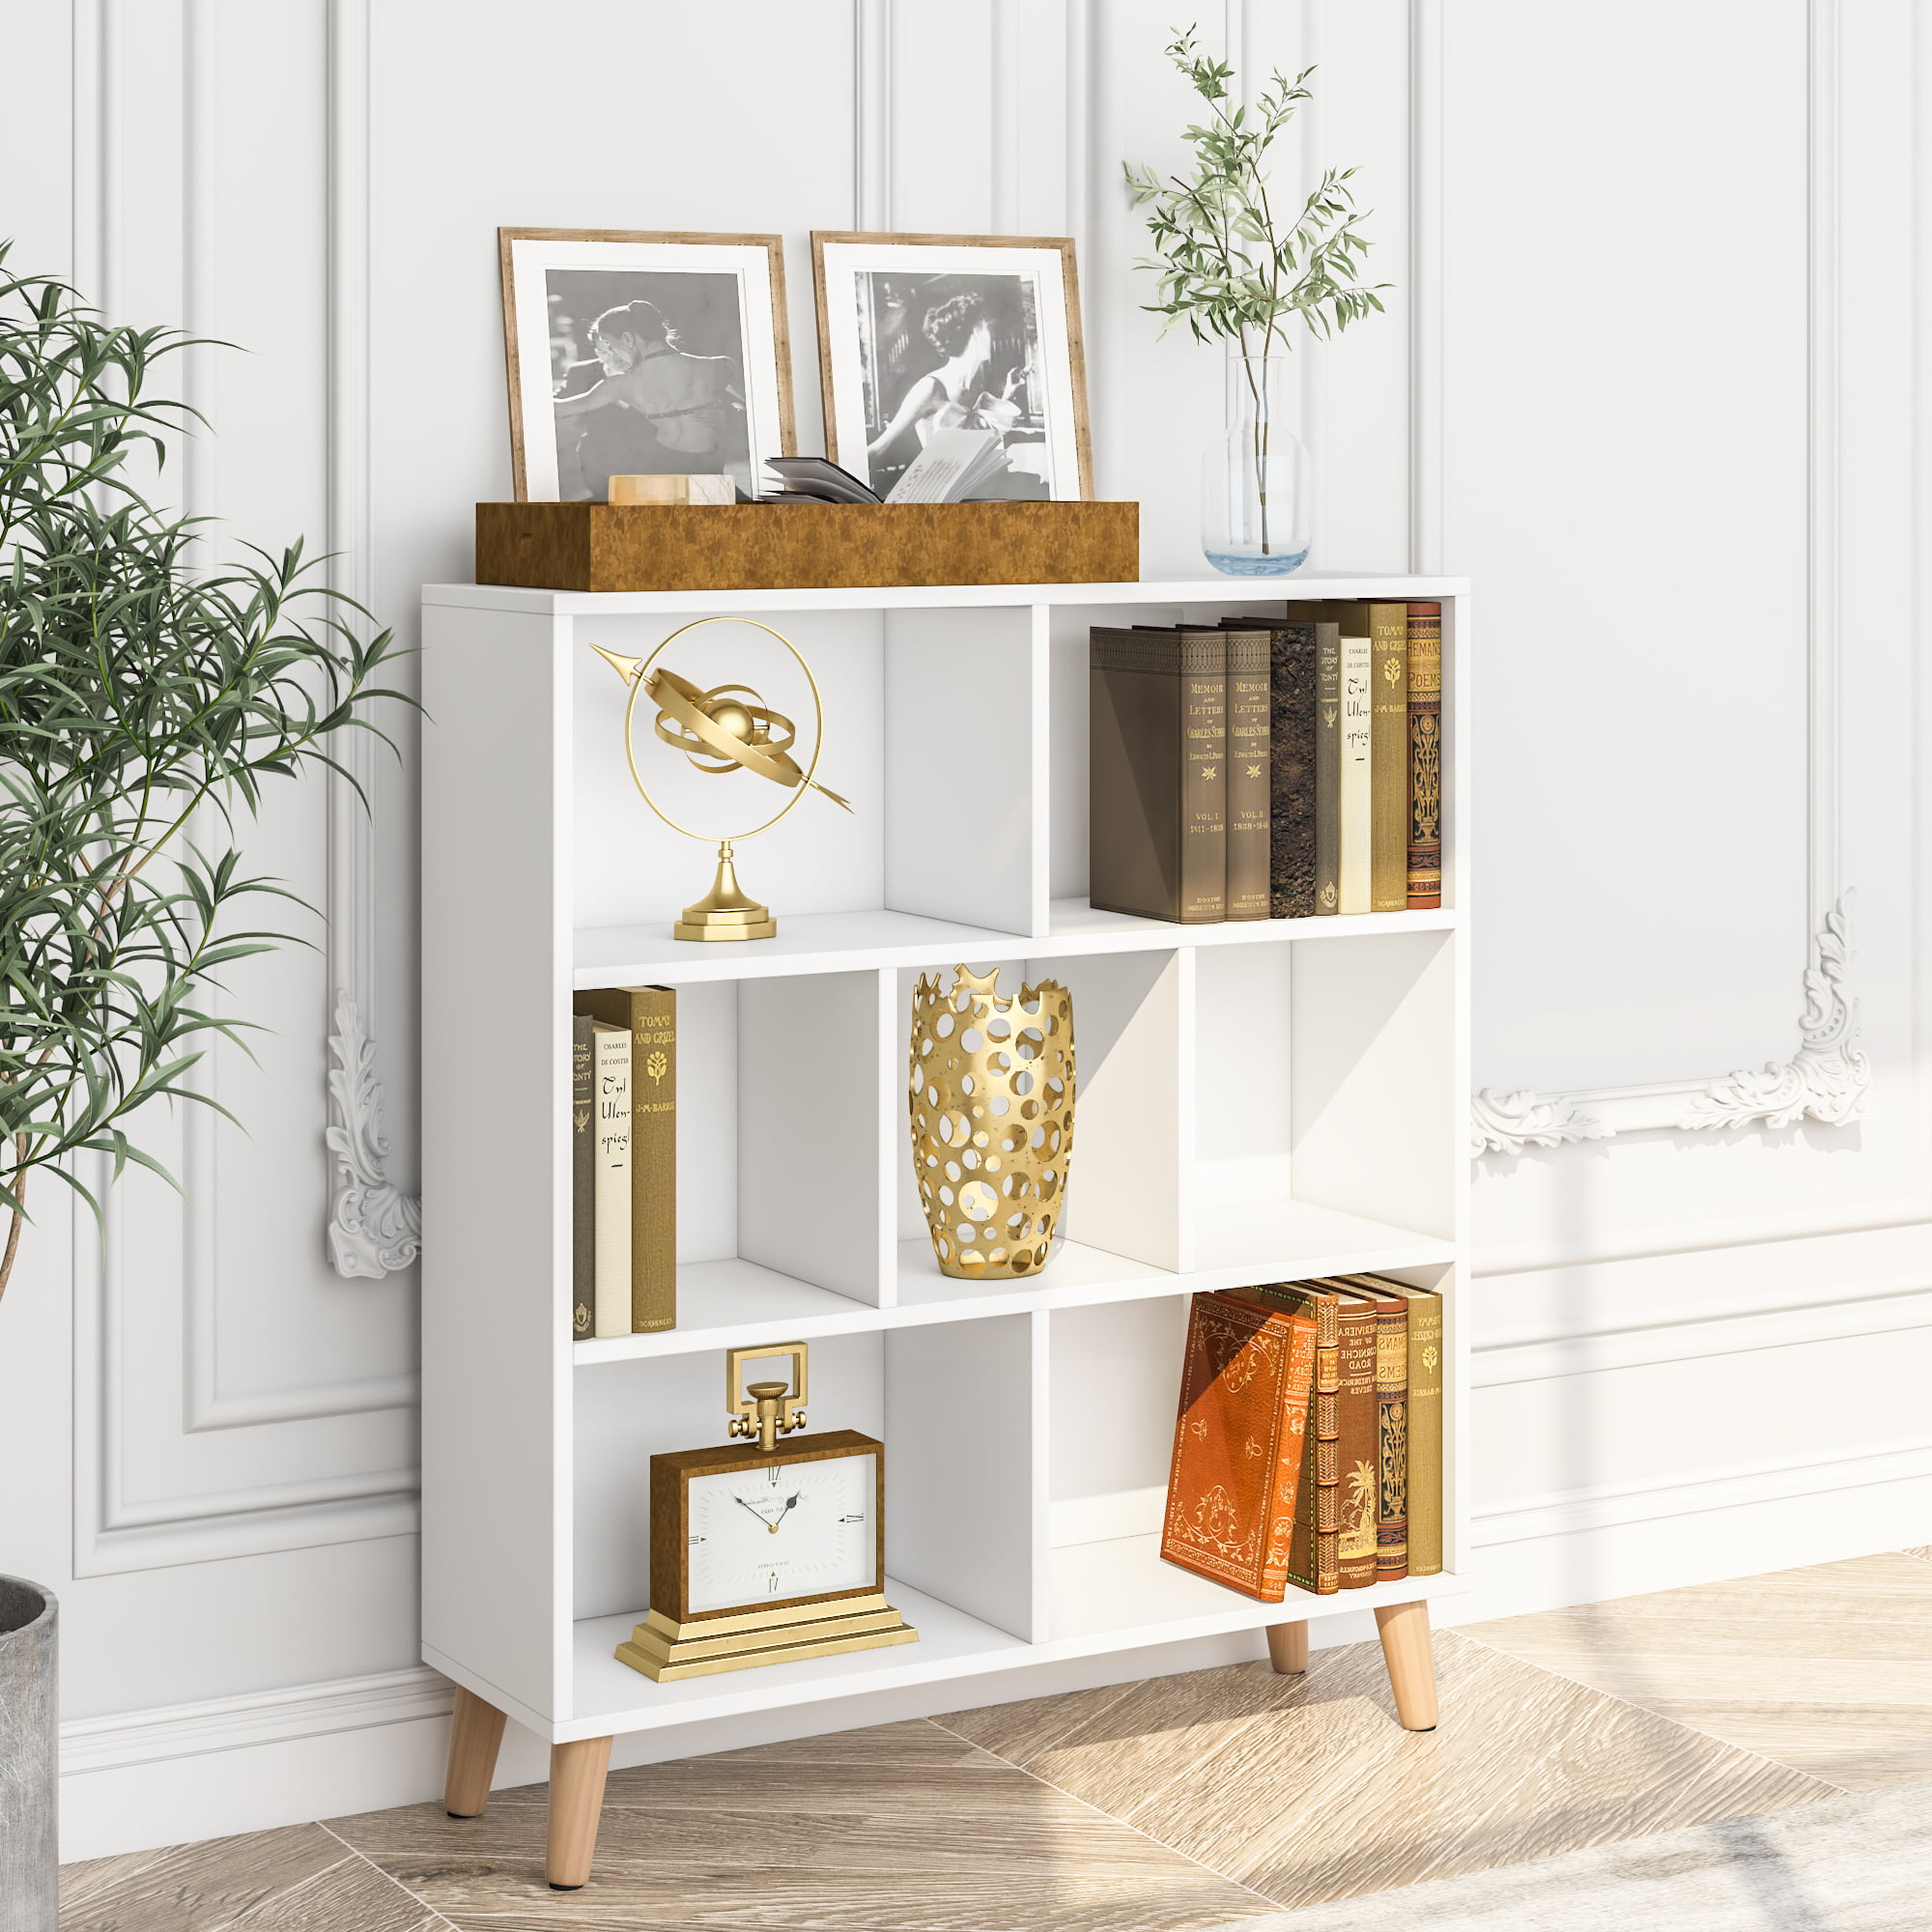 Dark Oak Homfa Bookcase Storage Shelf 3 Tier Wood Bookshelf Display Stand 6 Cubes Unit for Home Office Cabinet 